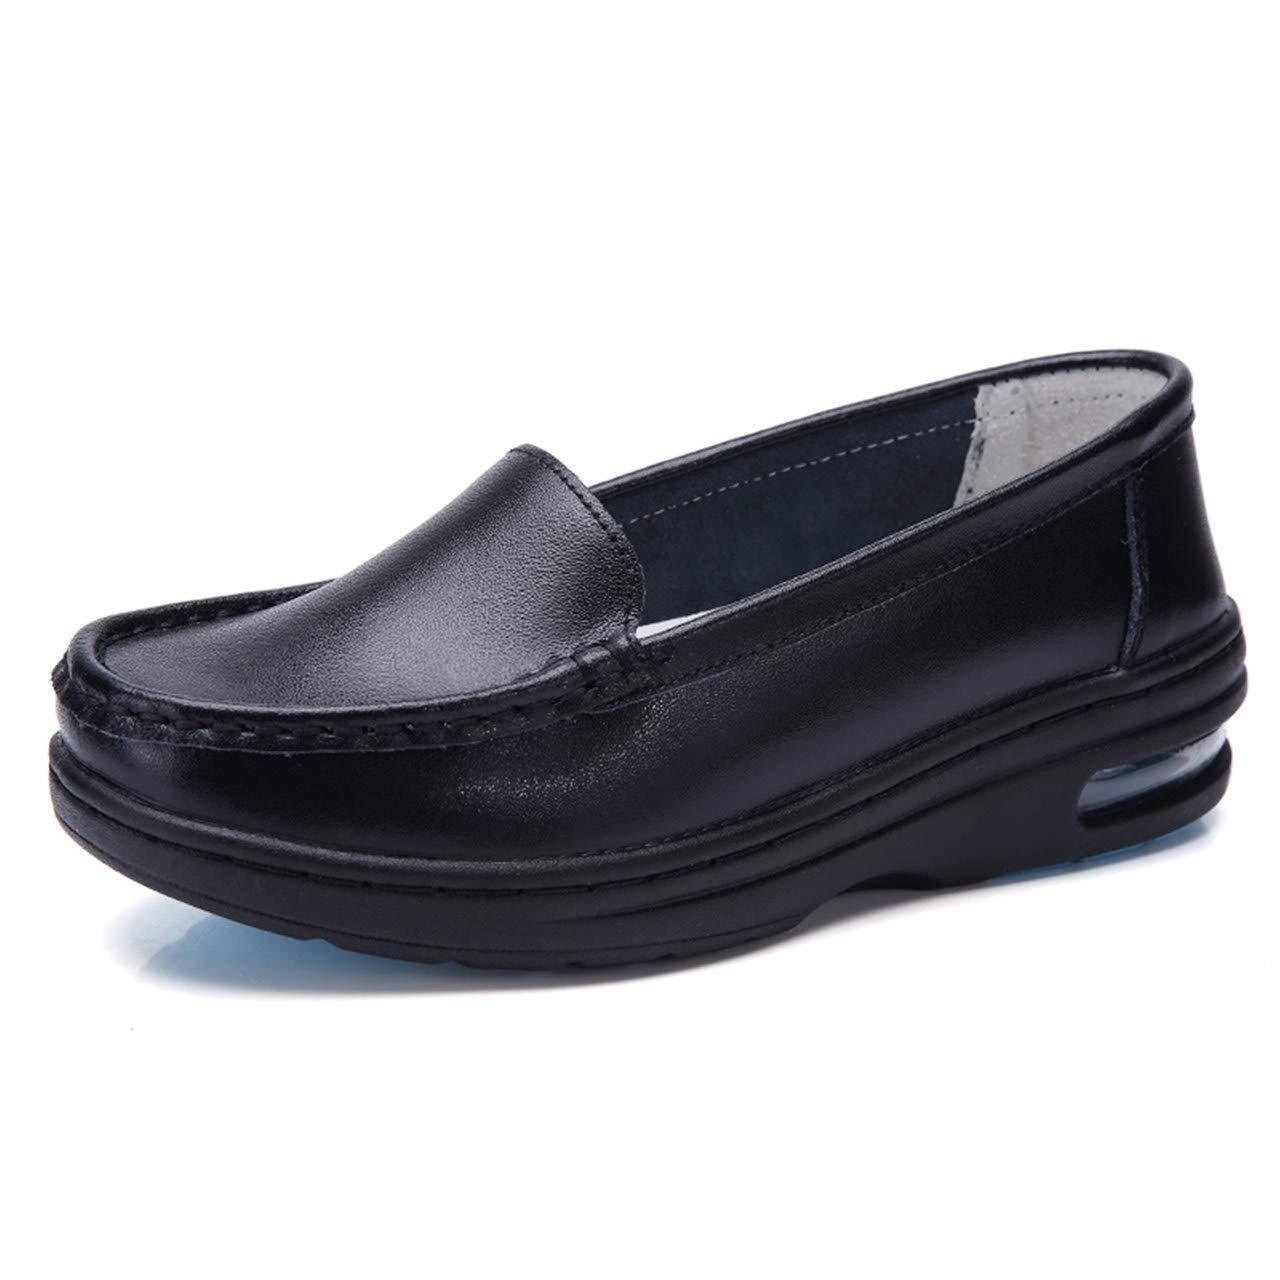 black leather nursing shoes